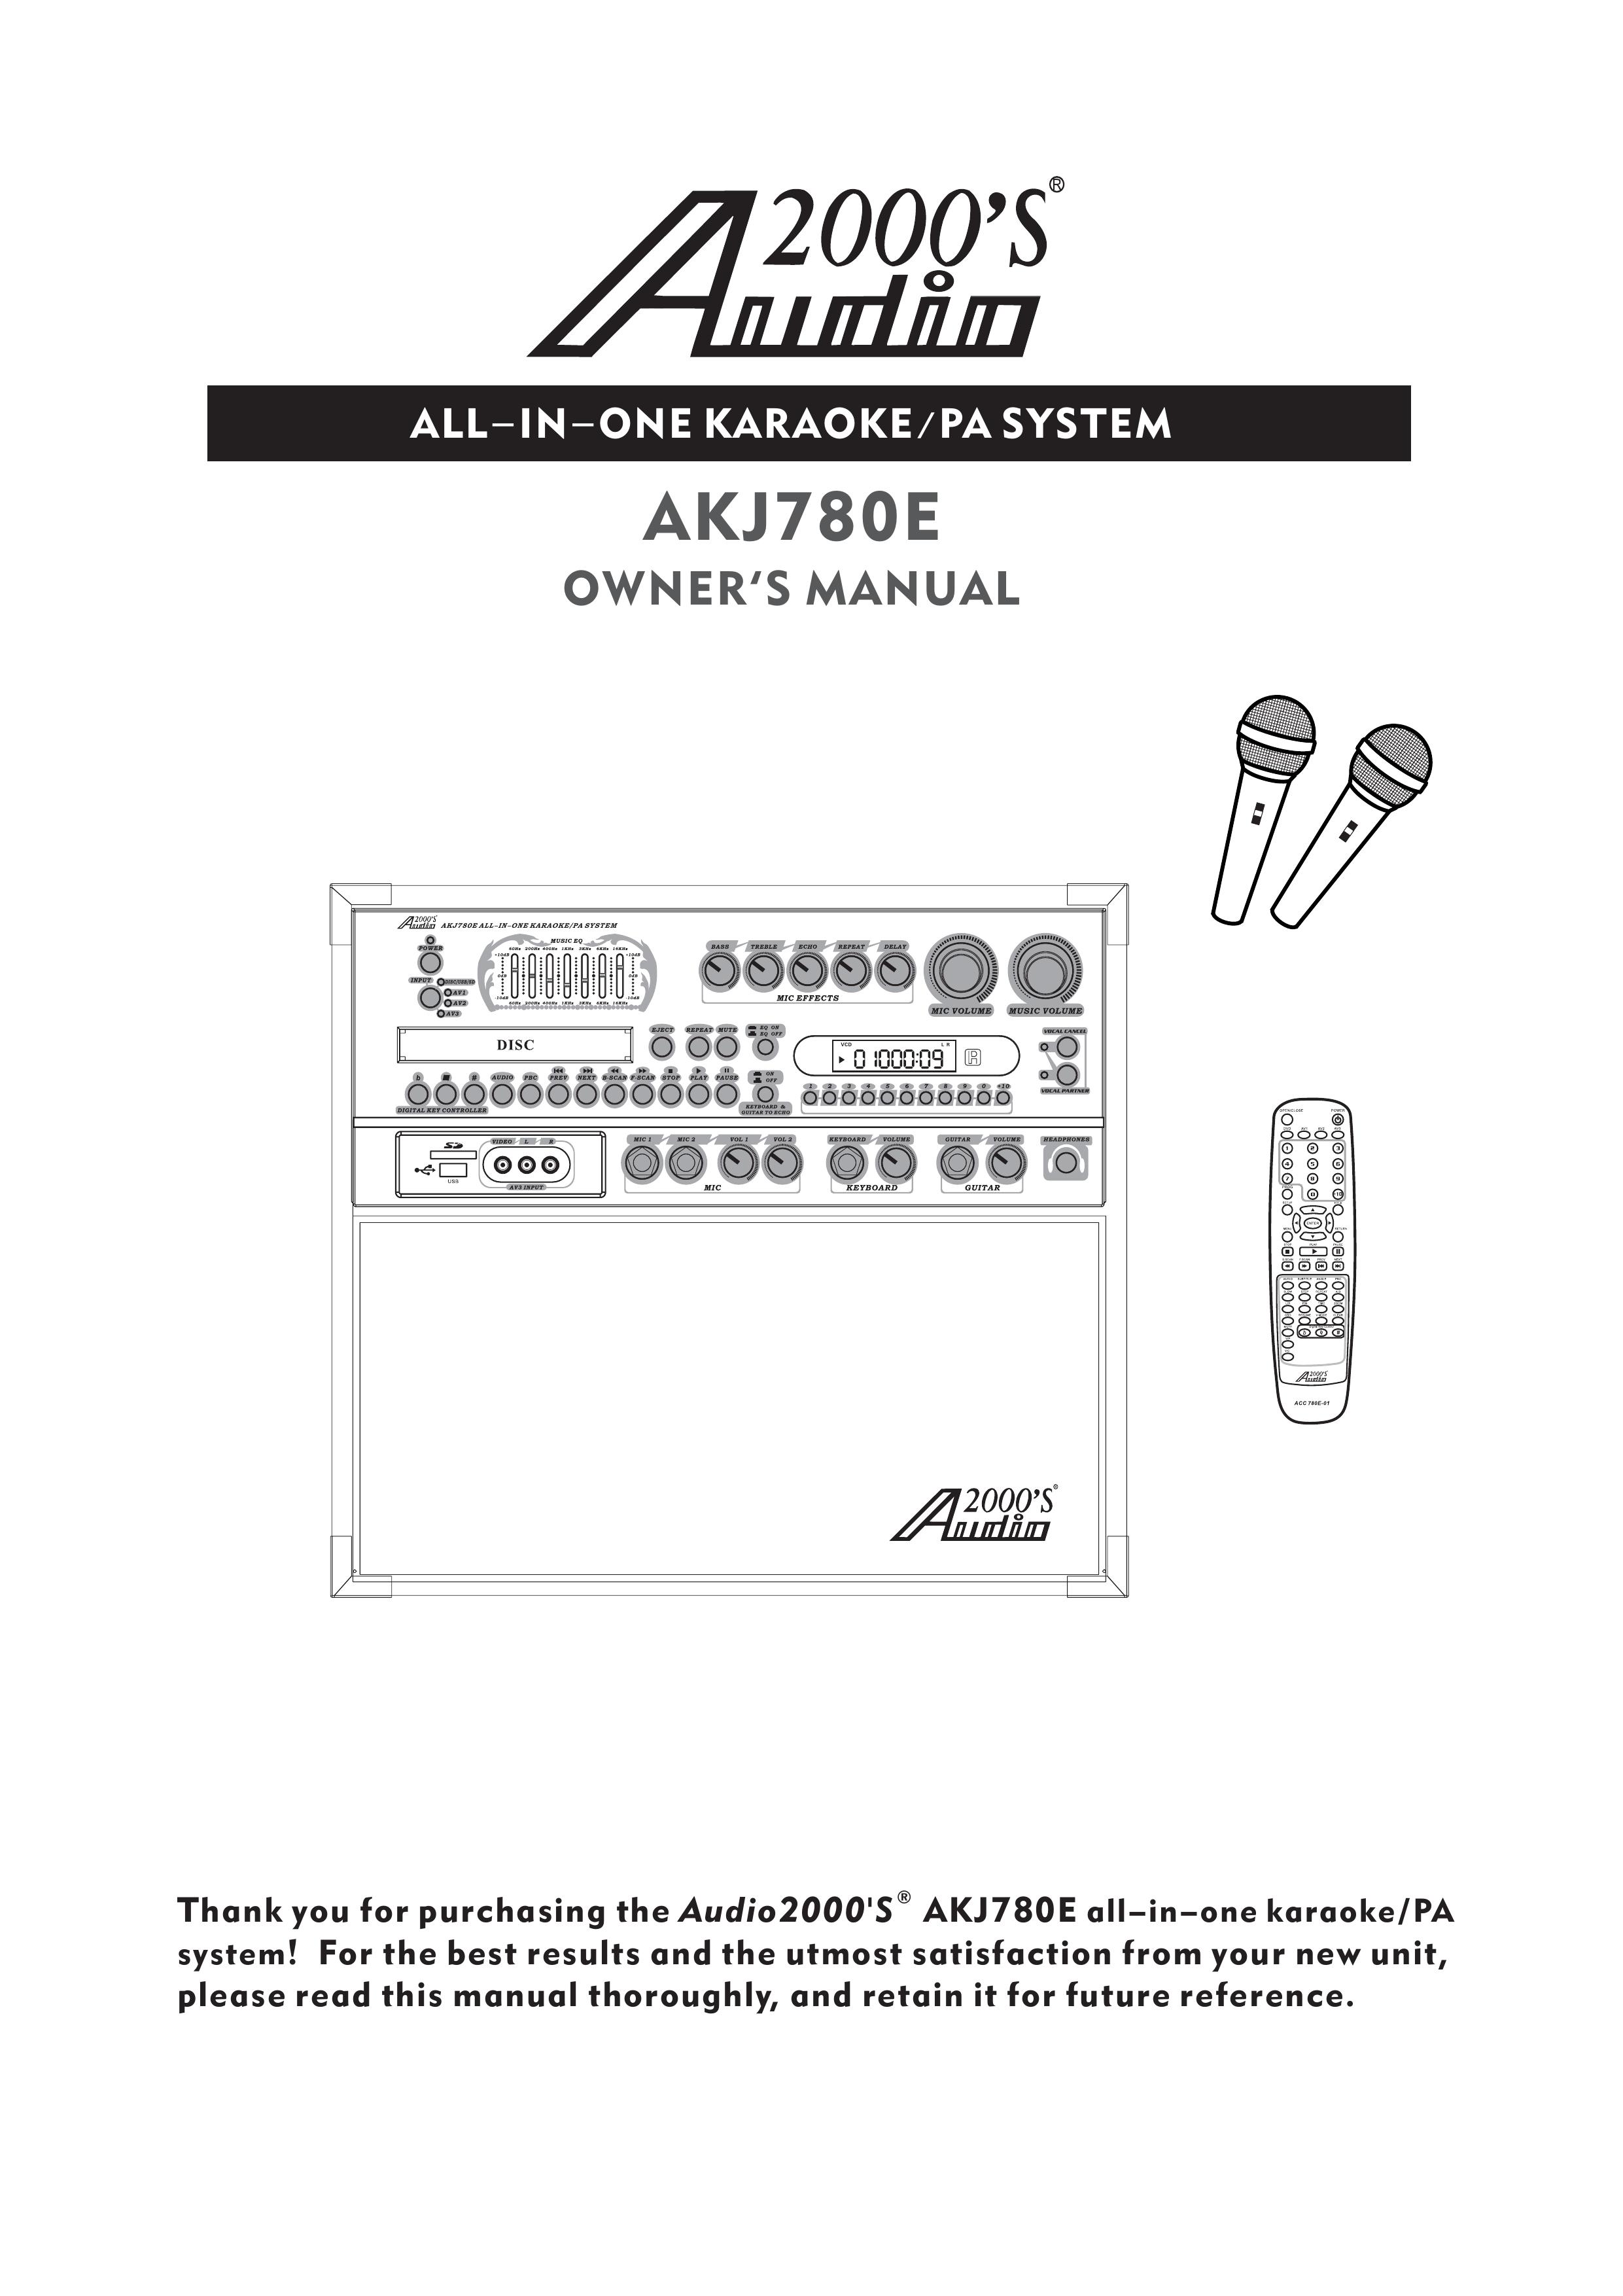 Audio2000's AKJ780E Karaoke Machine User Manual